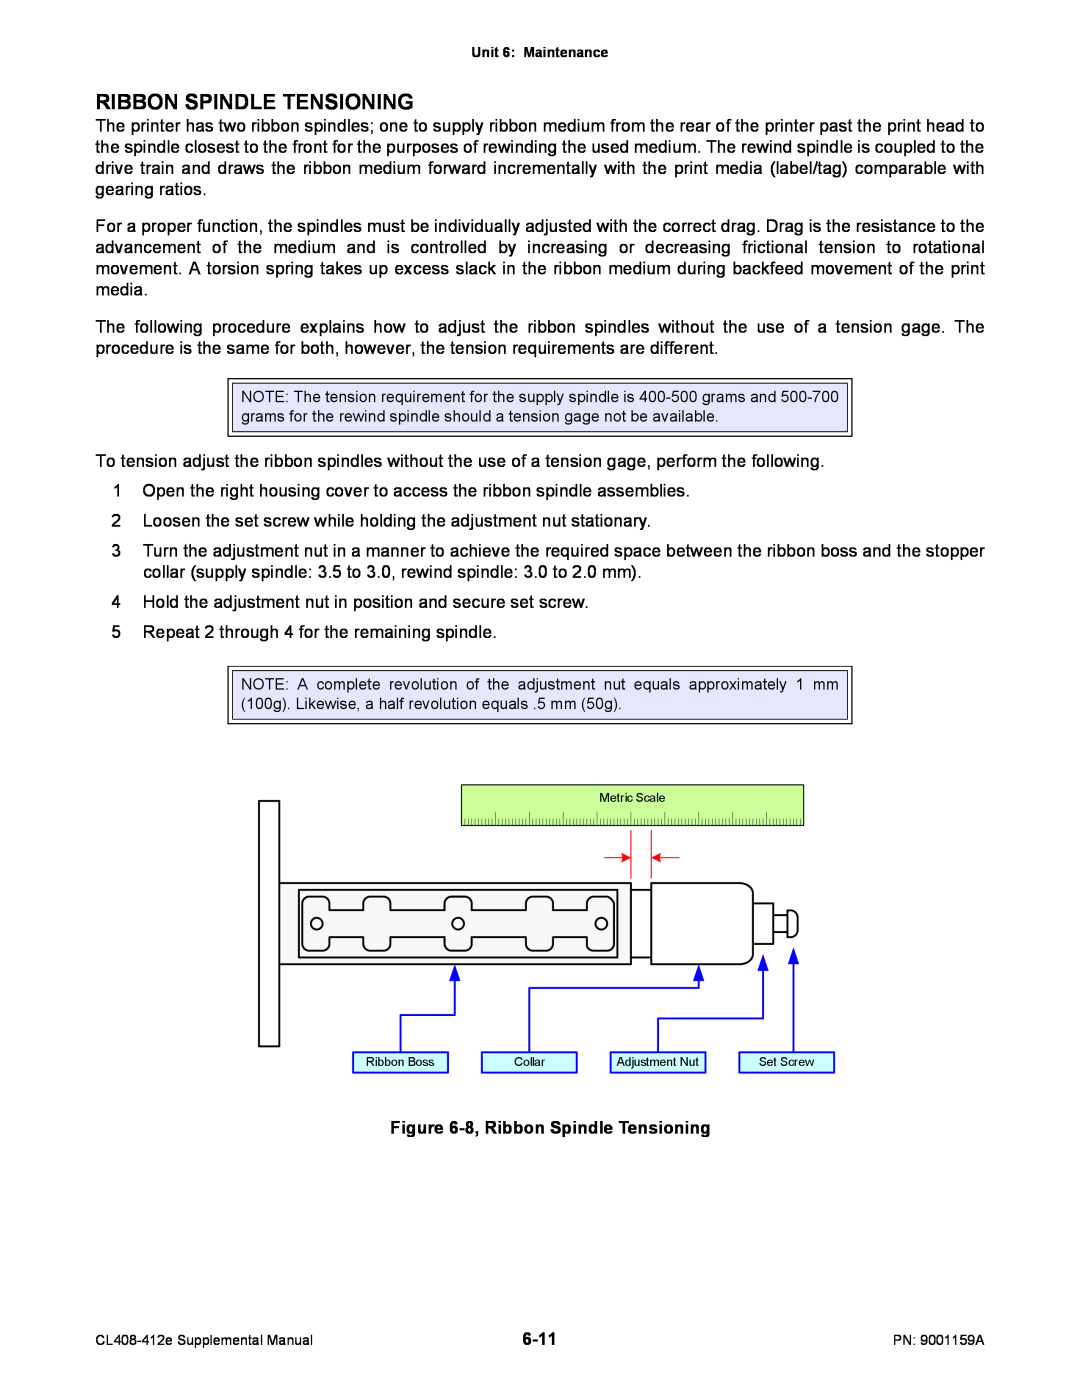 SATO CL408-412e manual 8, Ribbon Spindle Tensioning, 6-11 